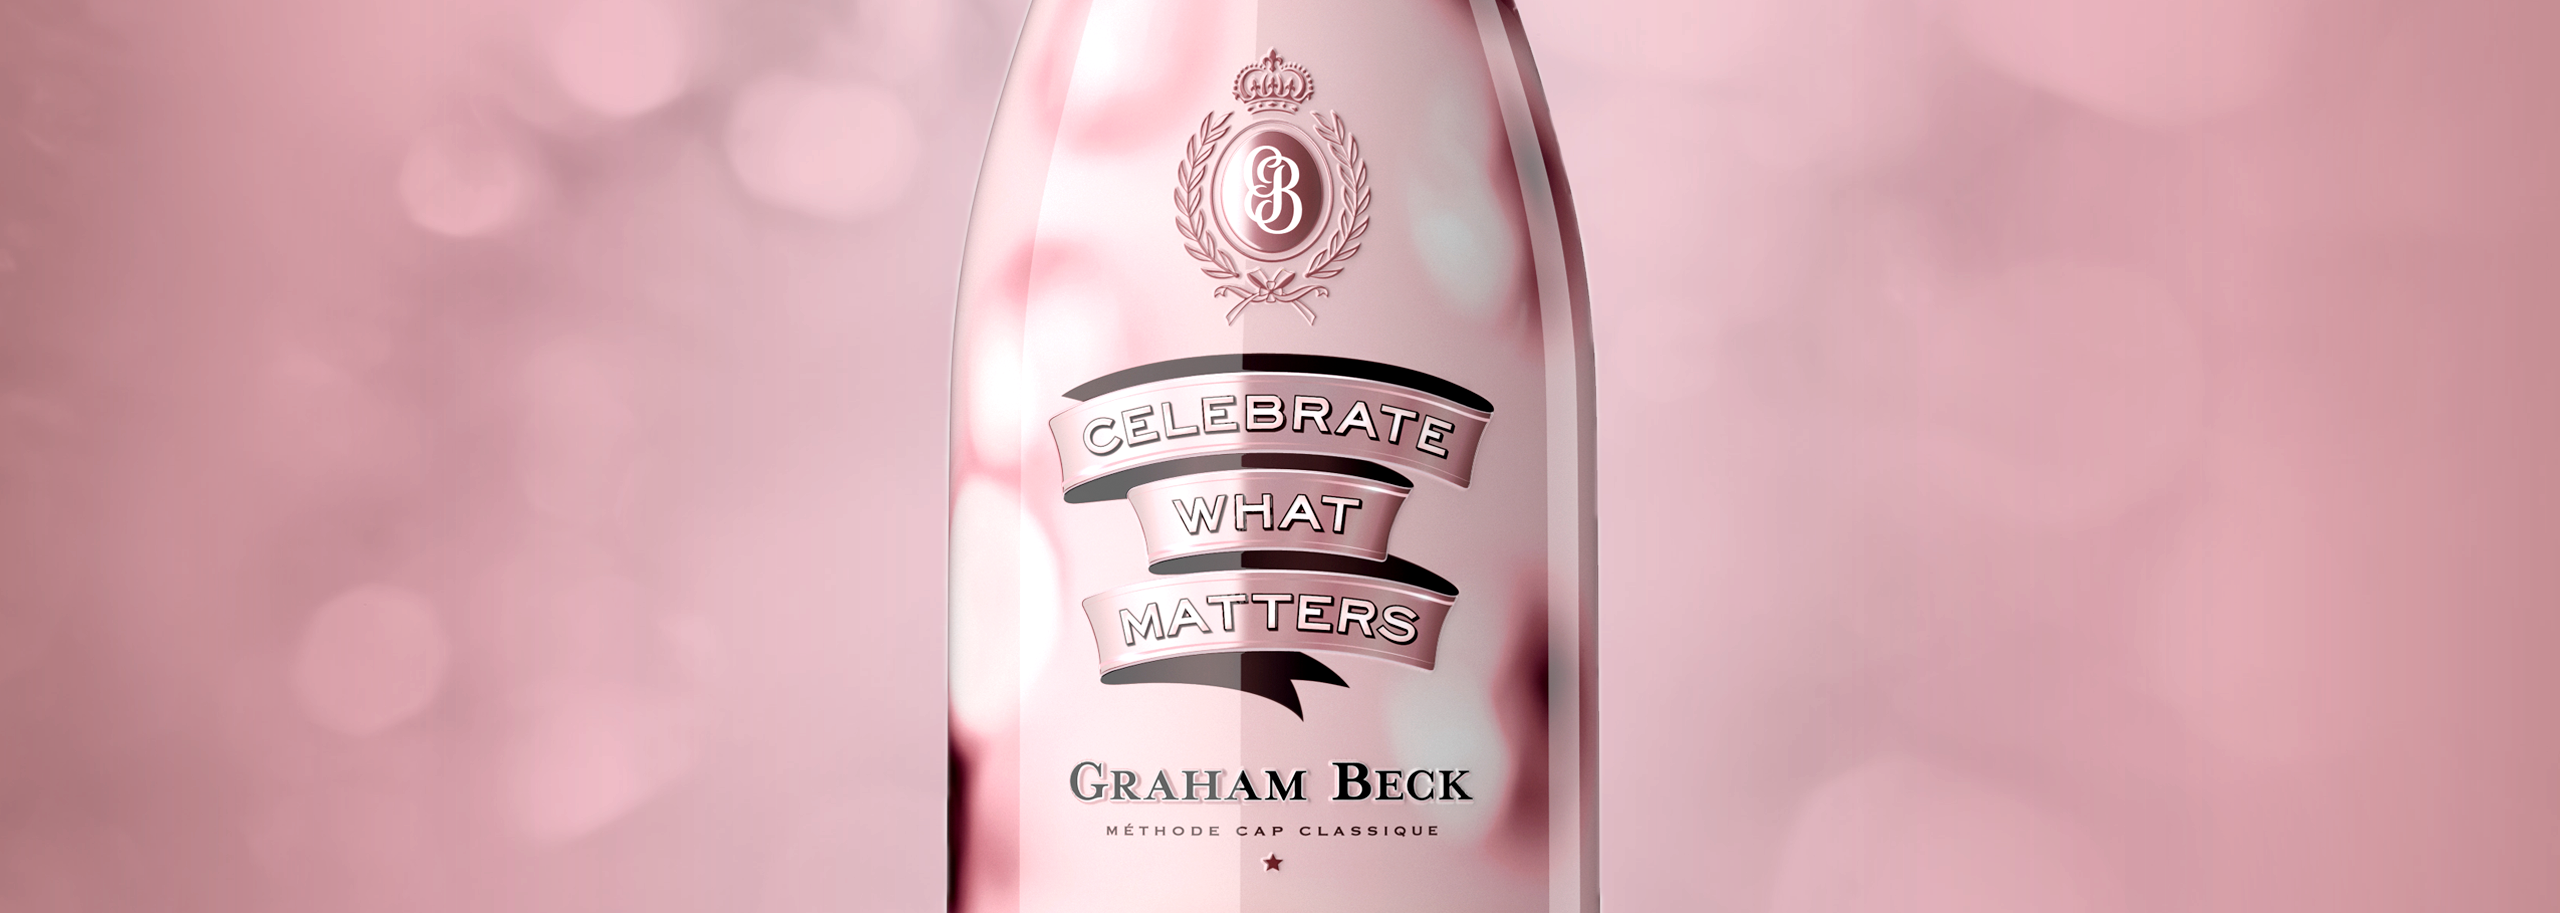 Graham Beck Celebrate What Matters-3